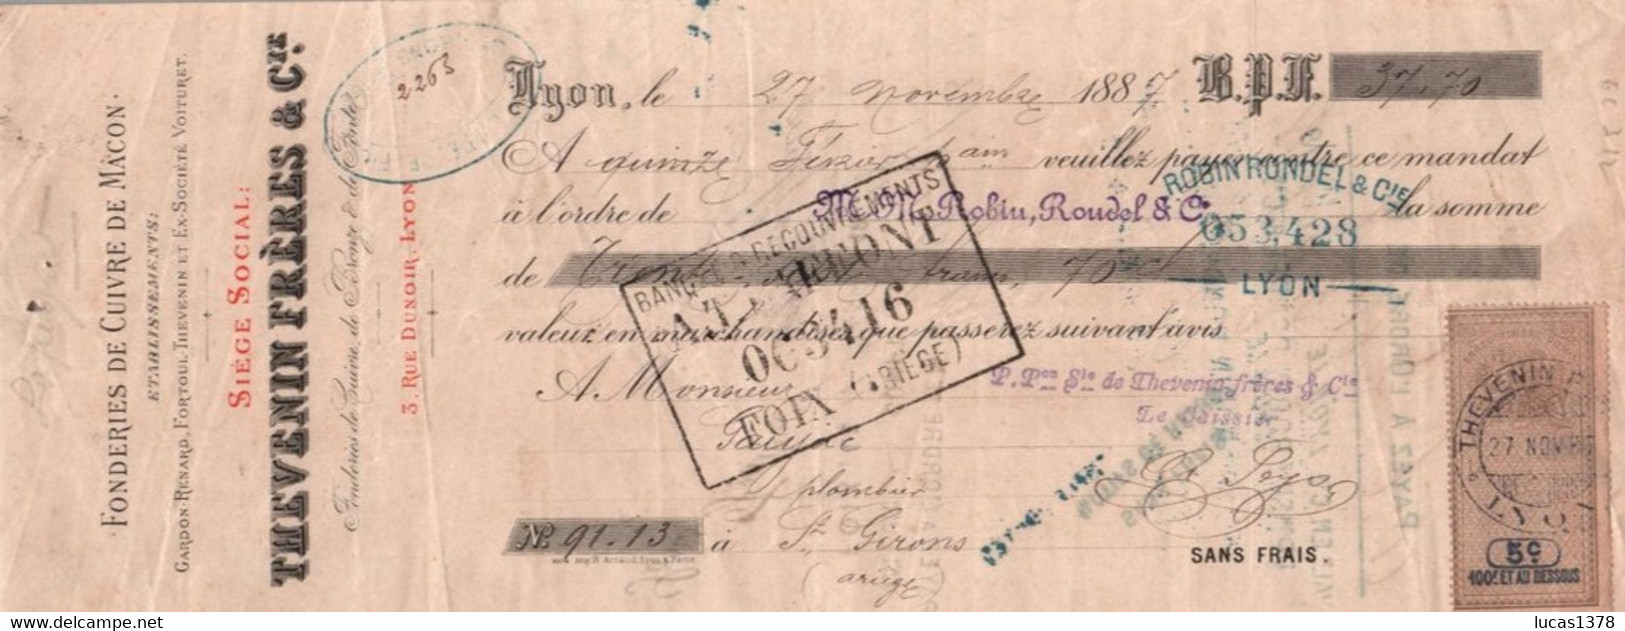 69 / CHEQUE 1887 /  TIMBRE FISCAL / LYON MACON  Sté Des FONDERIES De Cuivre THEVENIN Frères L. SEGUIN & Cie - Cheques & Traveler's Cheques